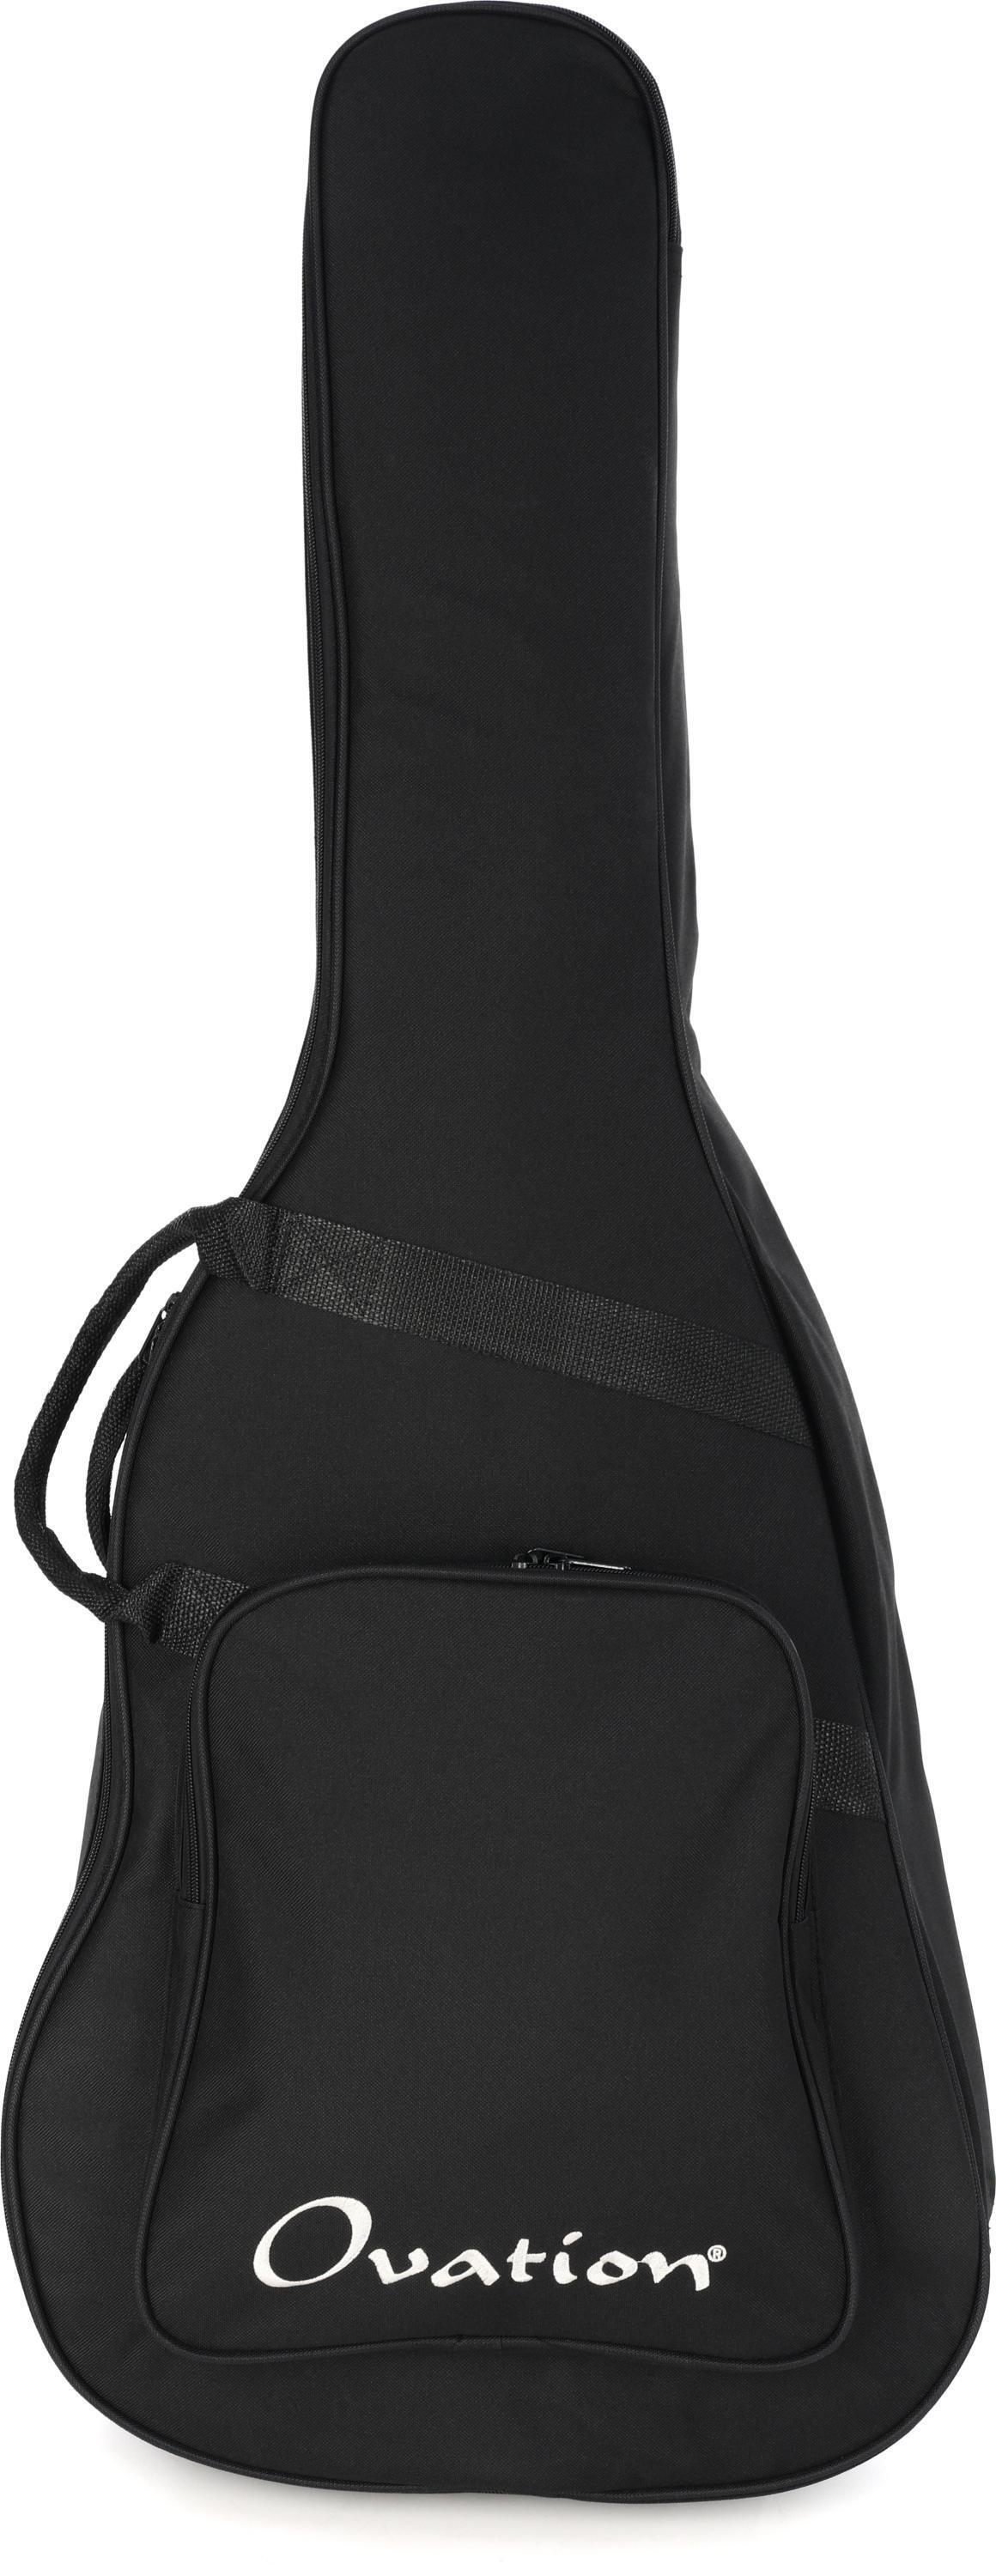 Ovation Guitar Strap Ultra® Padded Ball Glove Leather, Black